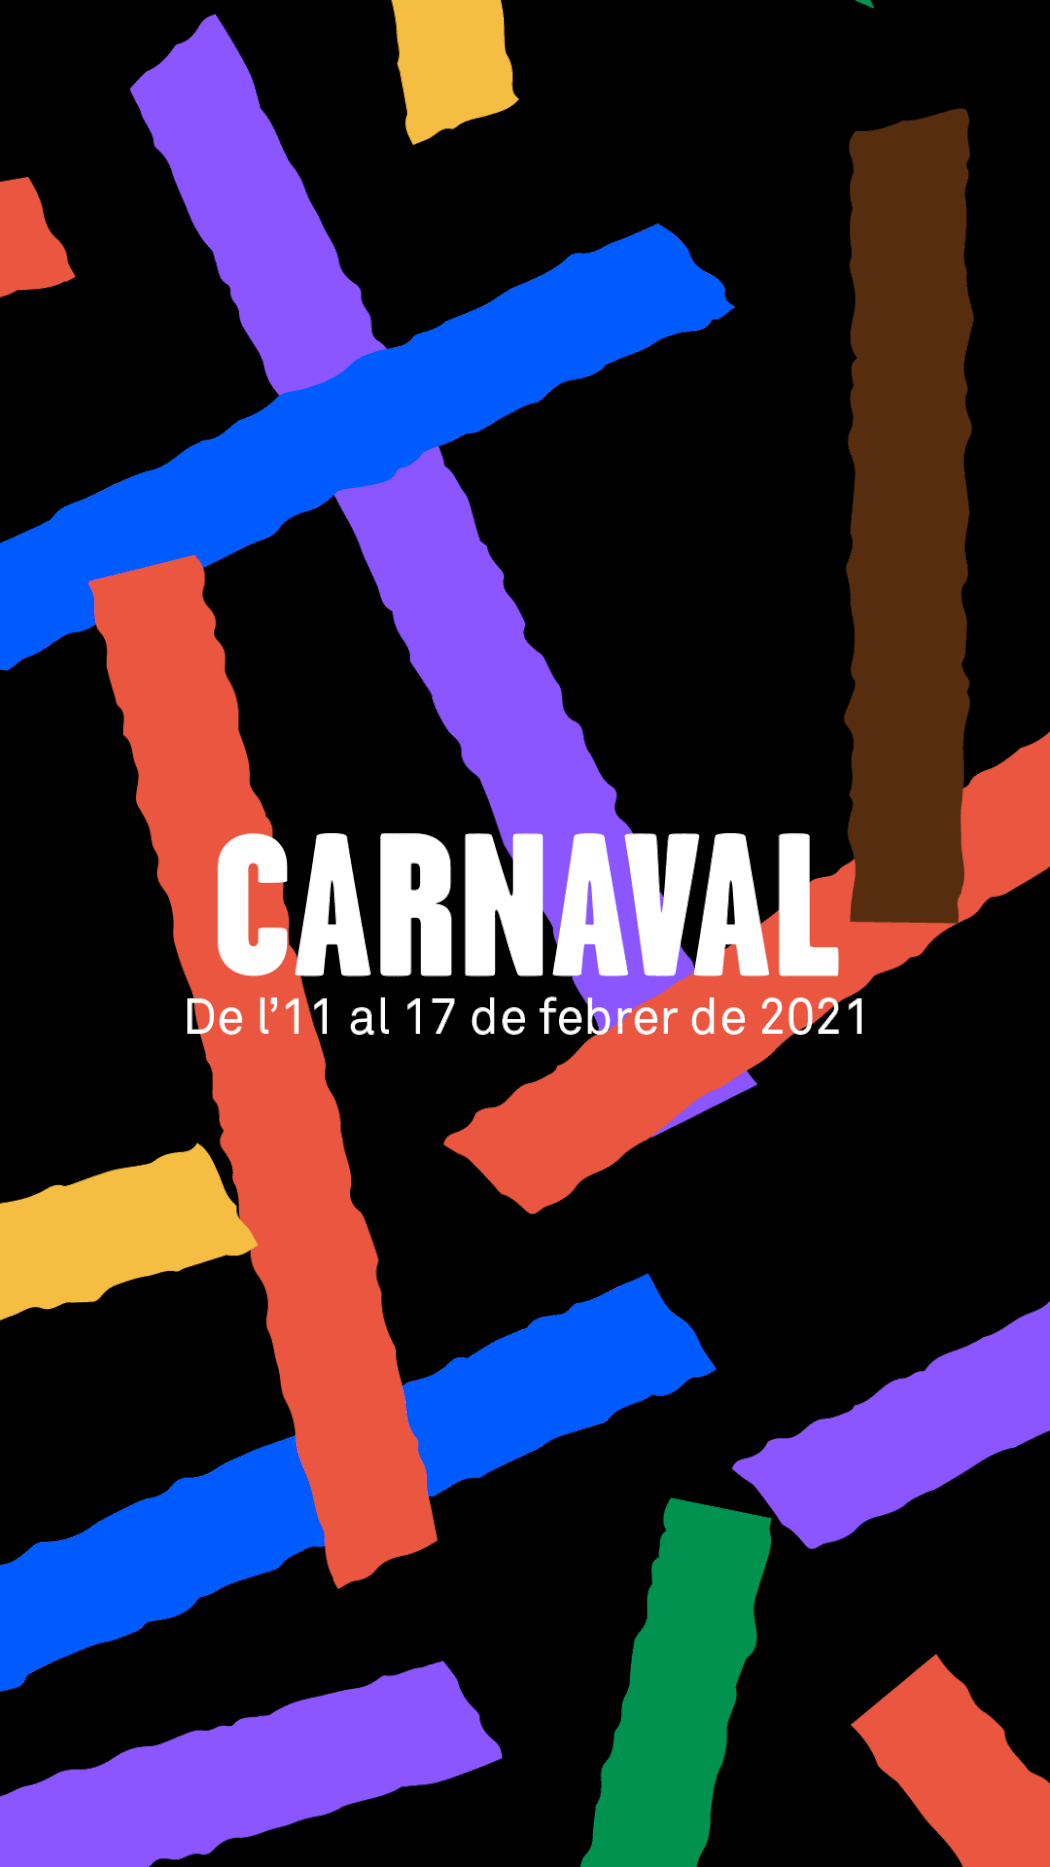 OOH campaign and digital advertising campaign for Carnaval by José Antonio Roda